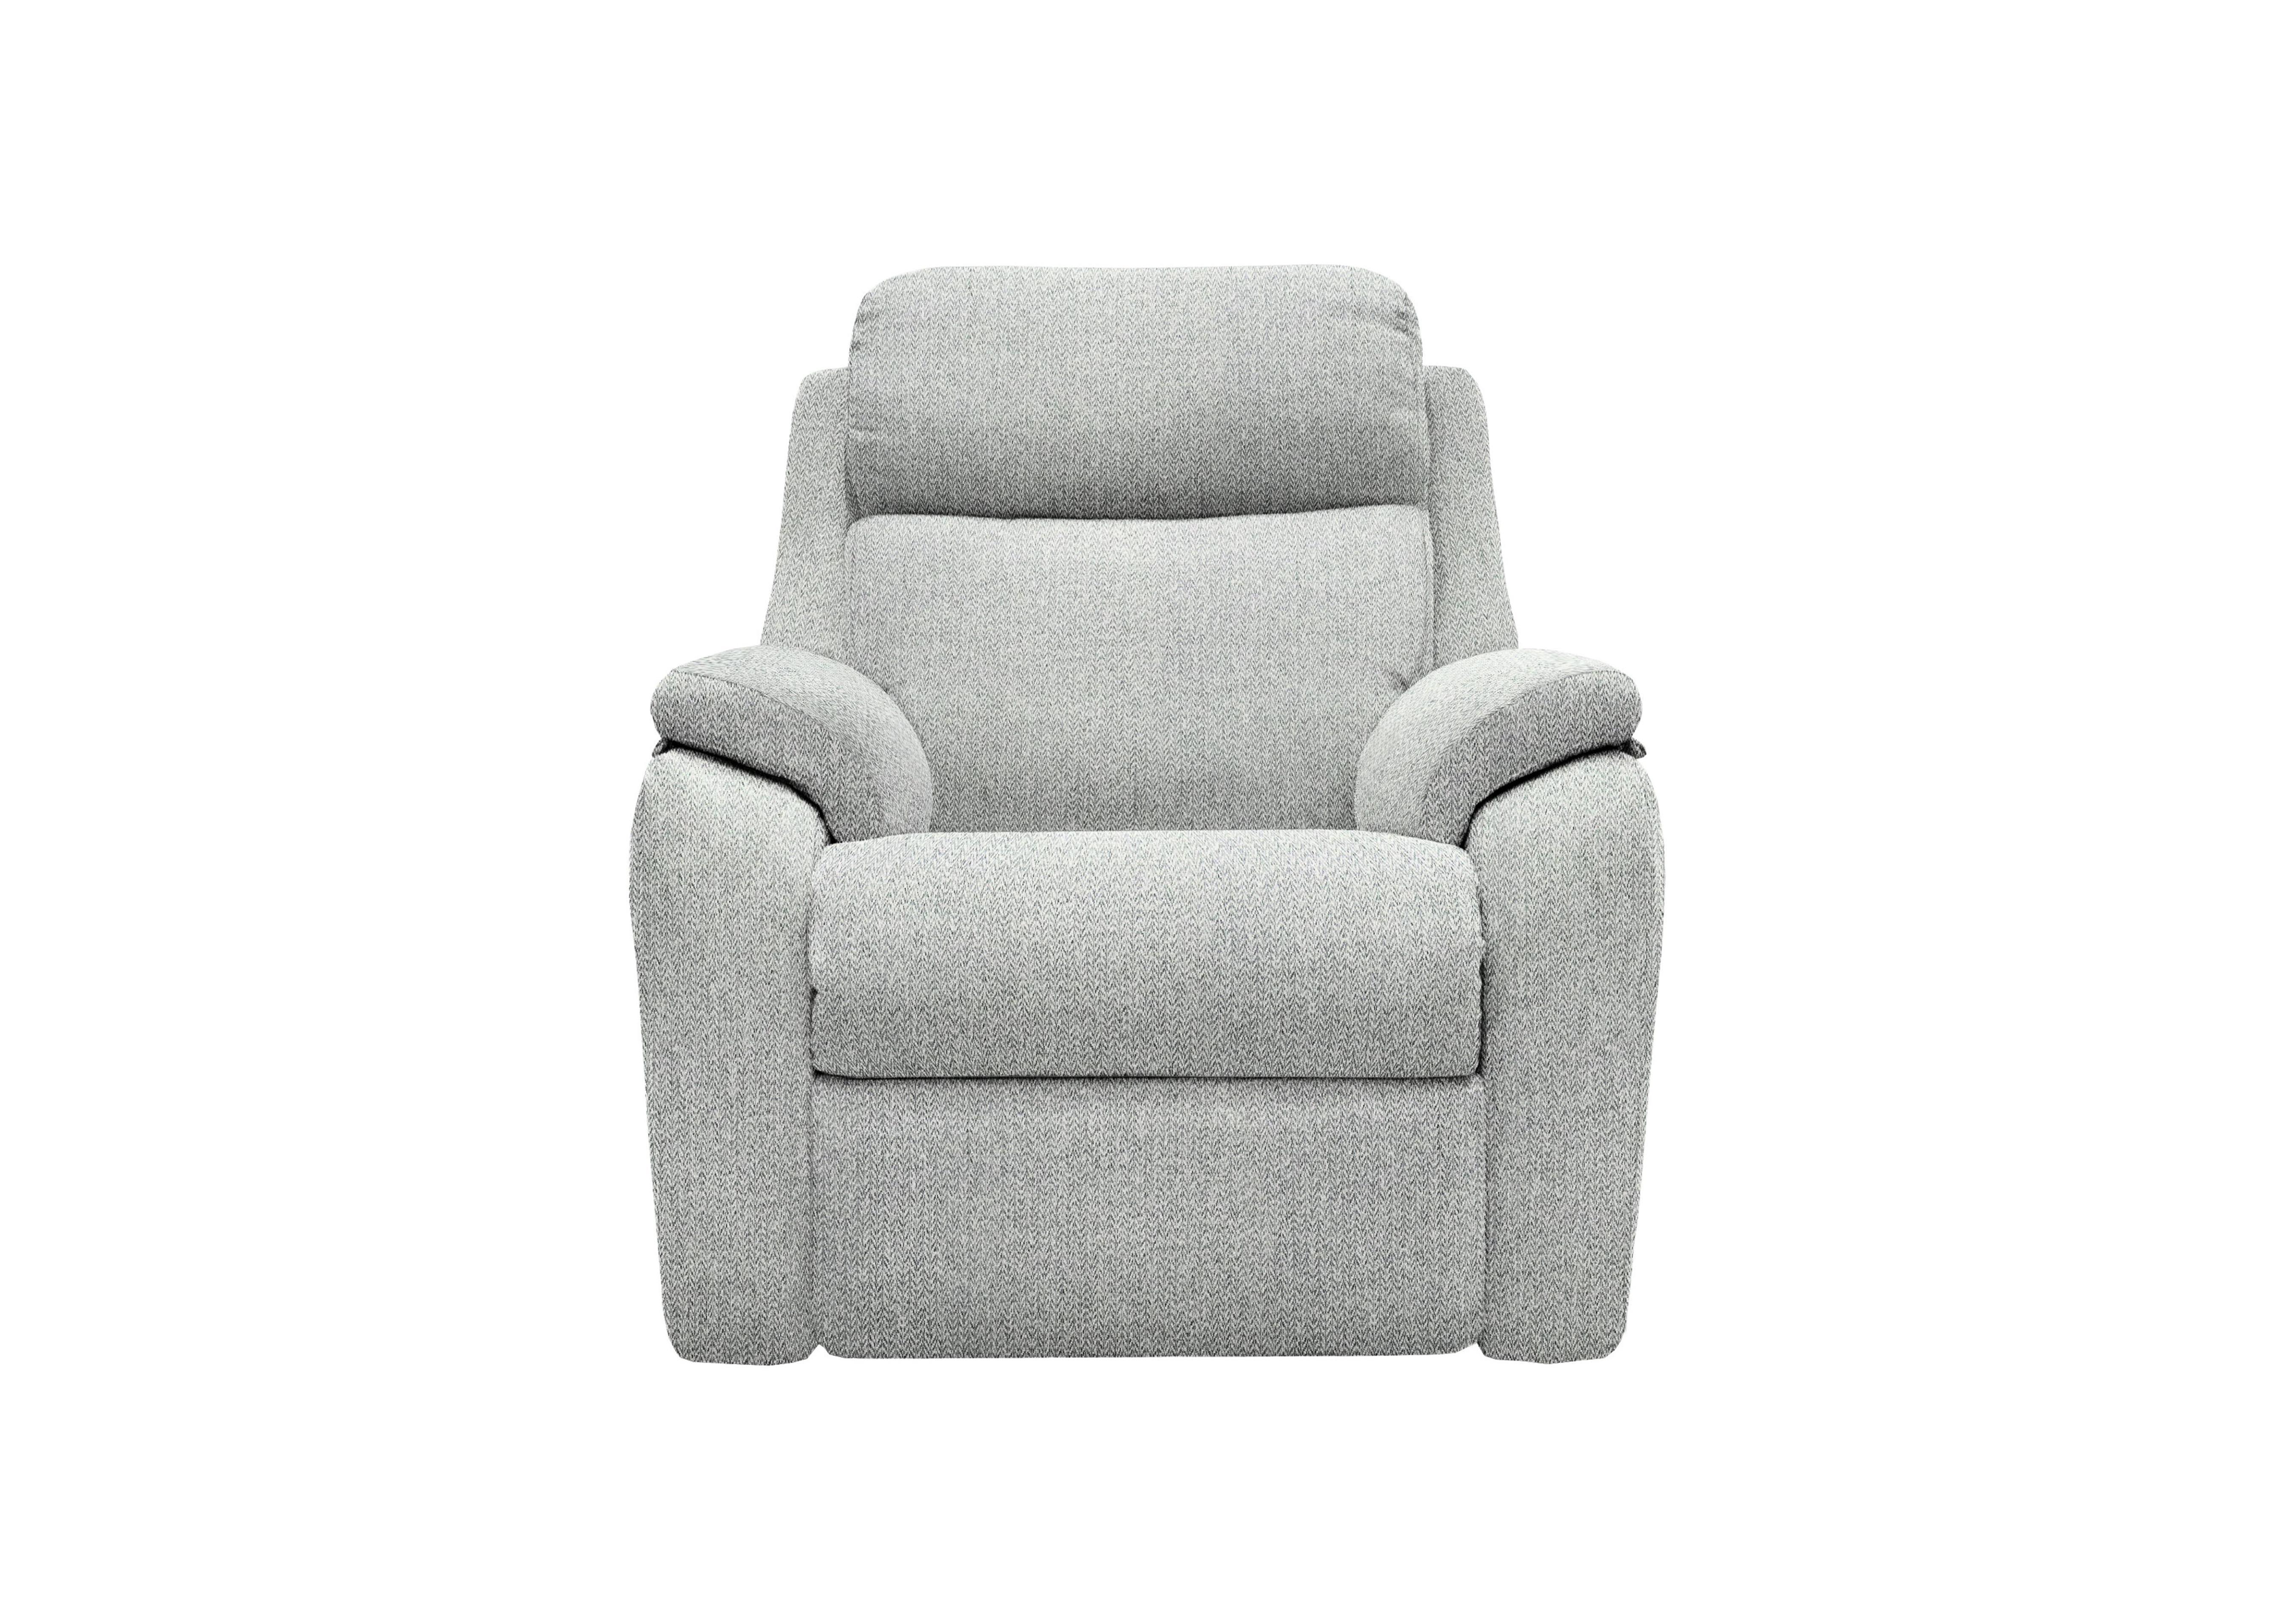 Kingsbury Fabric Armchair in A011 Swift Cygnet on Furniture Village